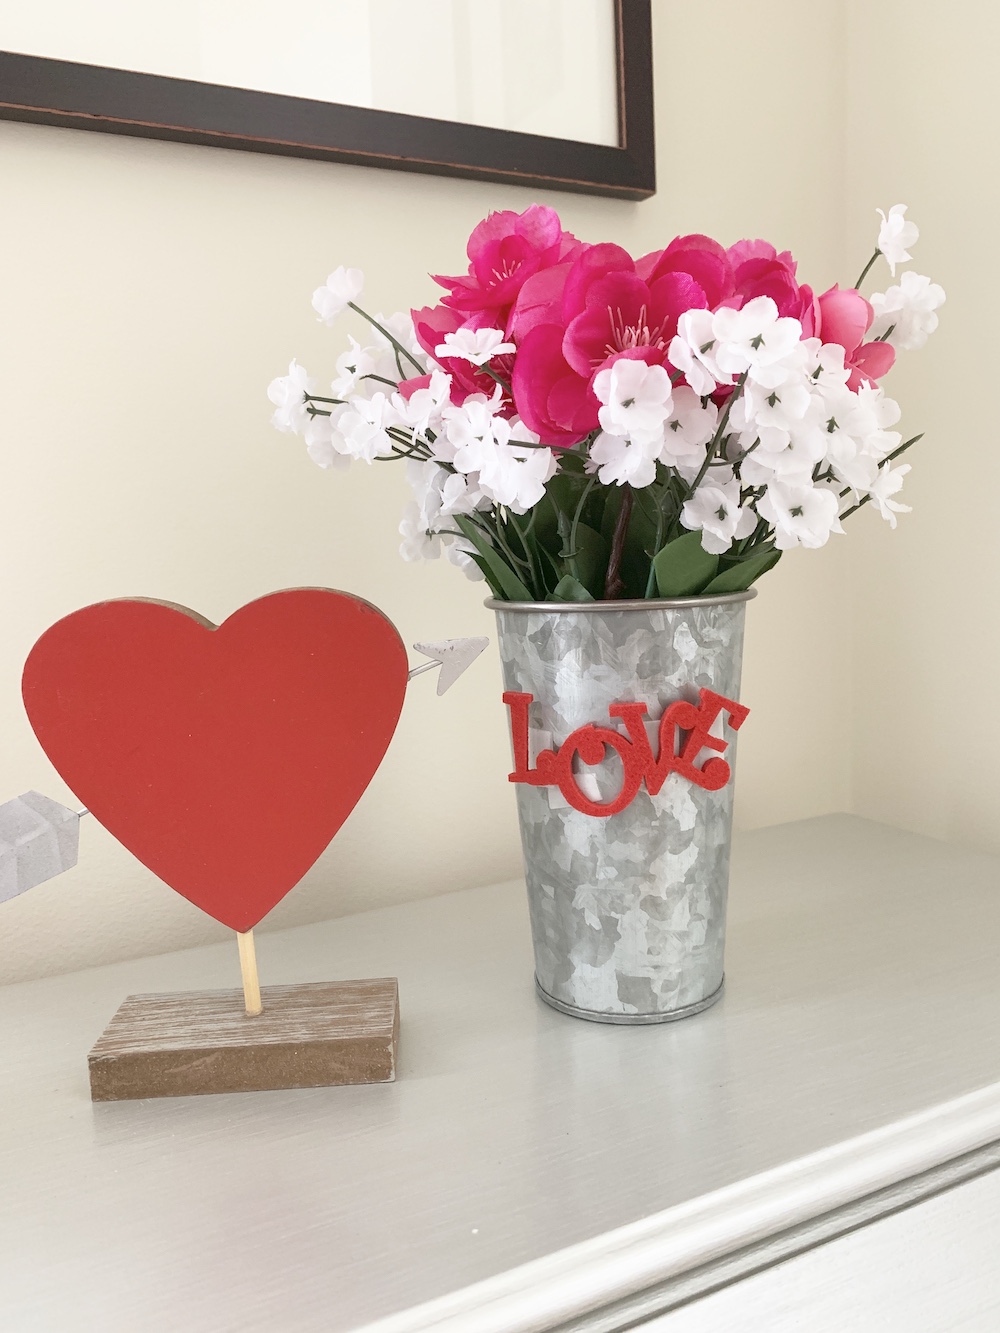 Valentine’s Day Home Decor Valentine Desktop #Farmhouse #Affordable #SimpleDecor #QuickAndEasy #BudgetFriendly #Valentine #ValentinesDay #DIY #StValentinesDecor #FarmhouseDecor